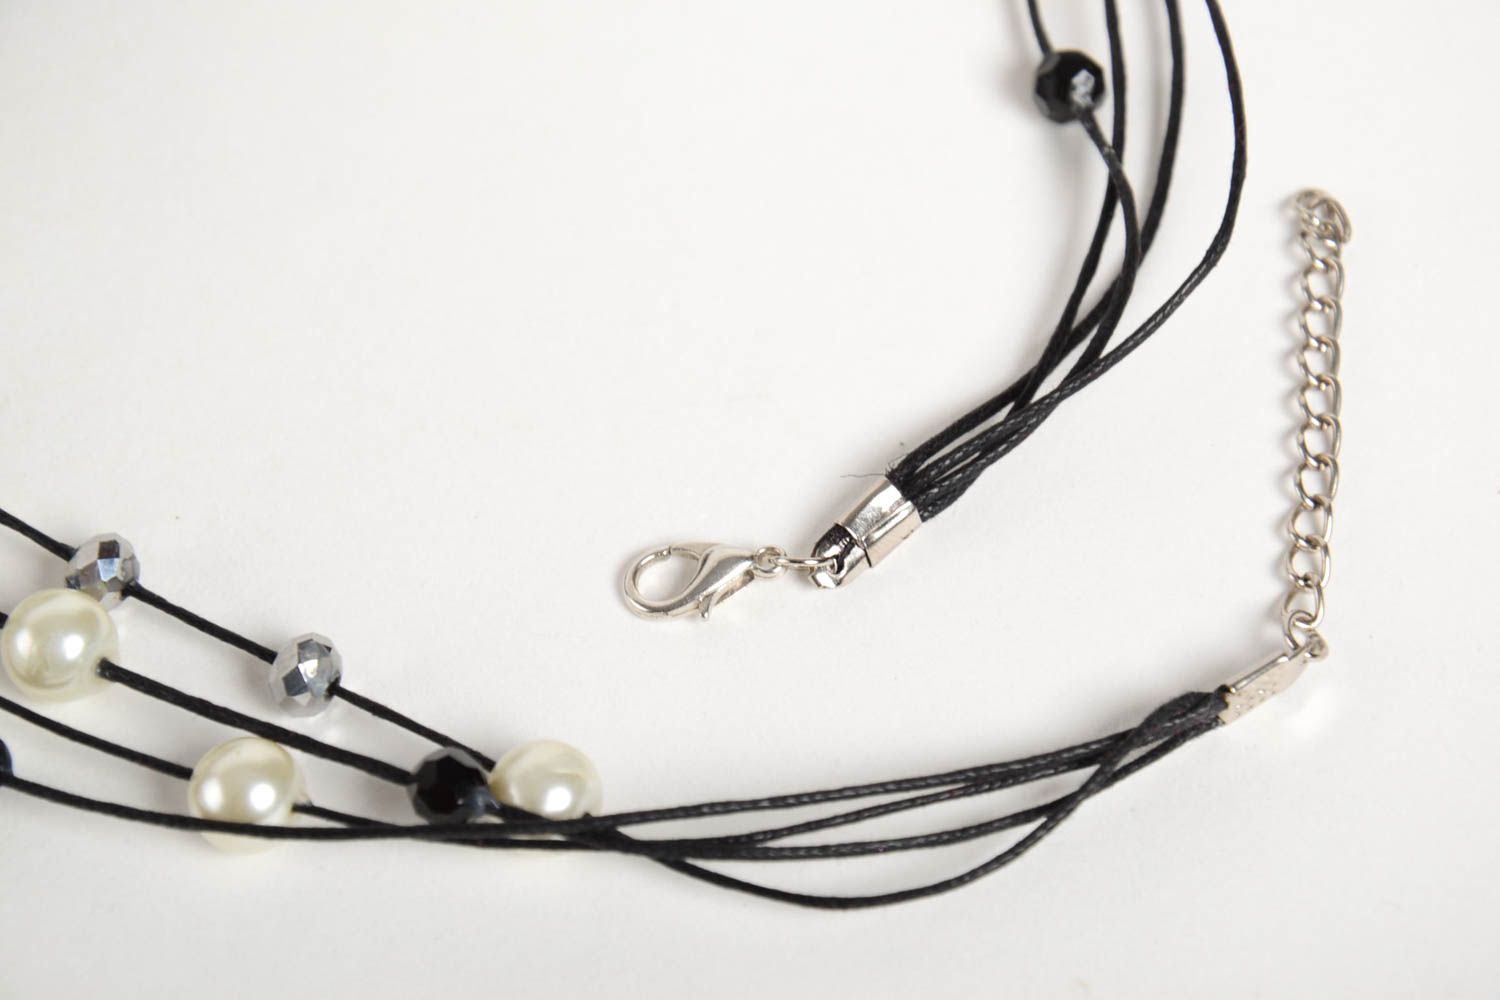 Handmade necklace designer accessory unusual jewelry leather jewelry gift ideas photo 5